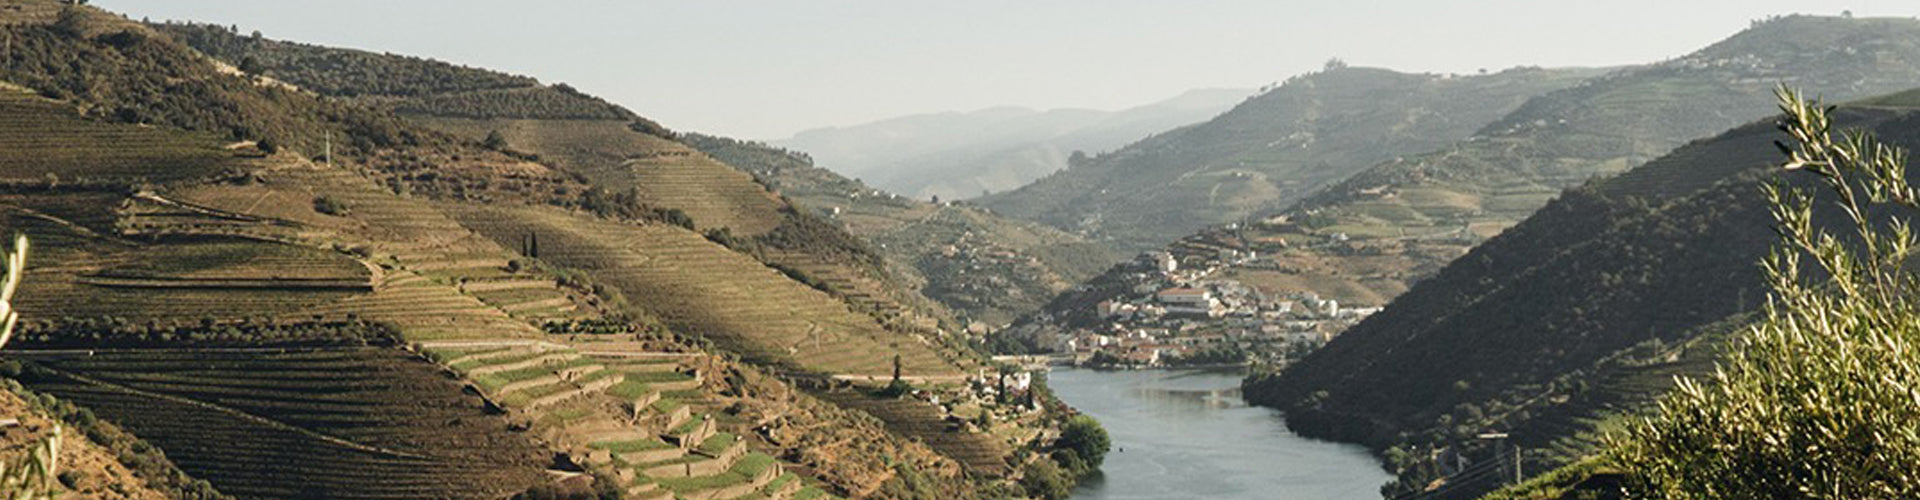 Sandeman Vineyards in the Douro Region of Portugal